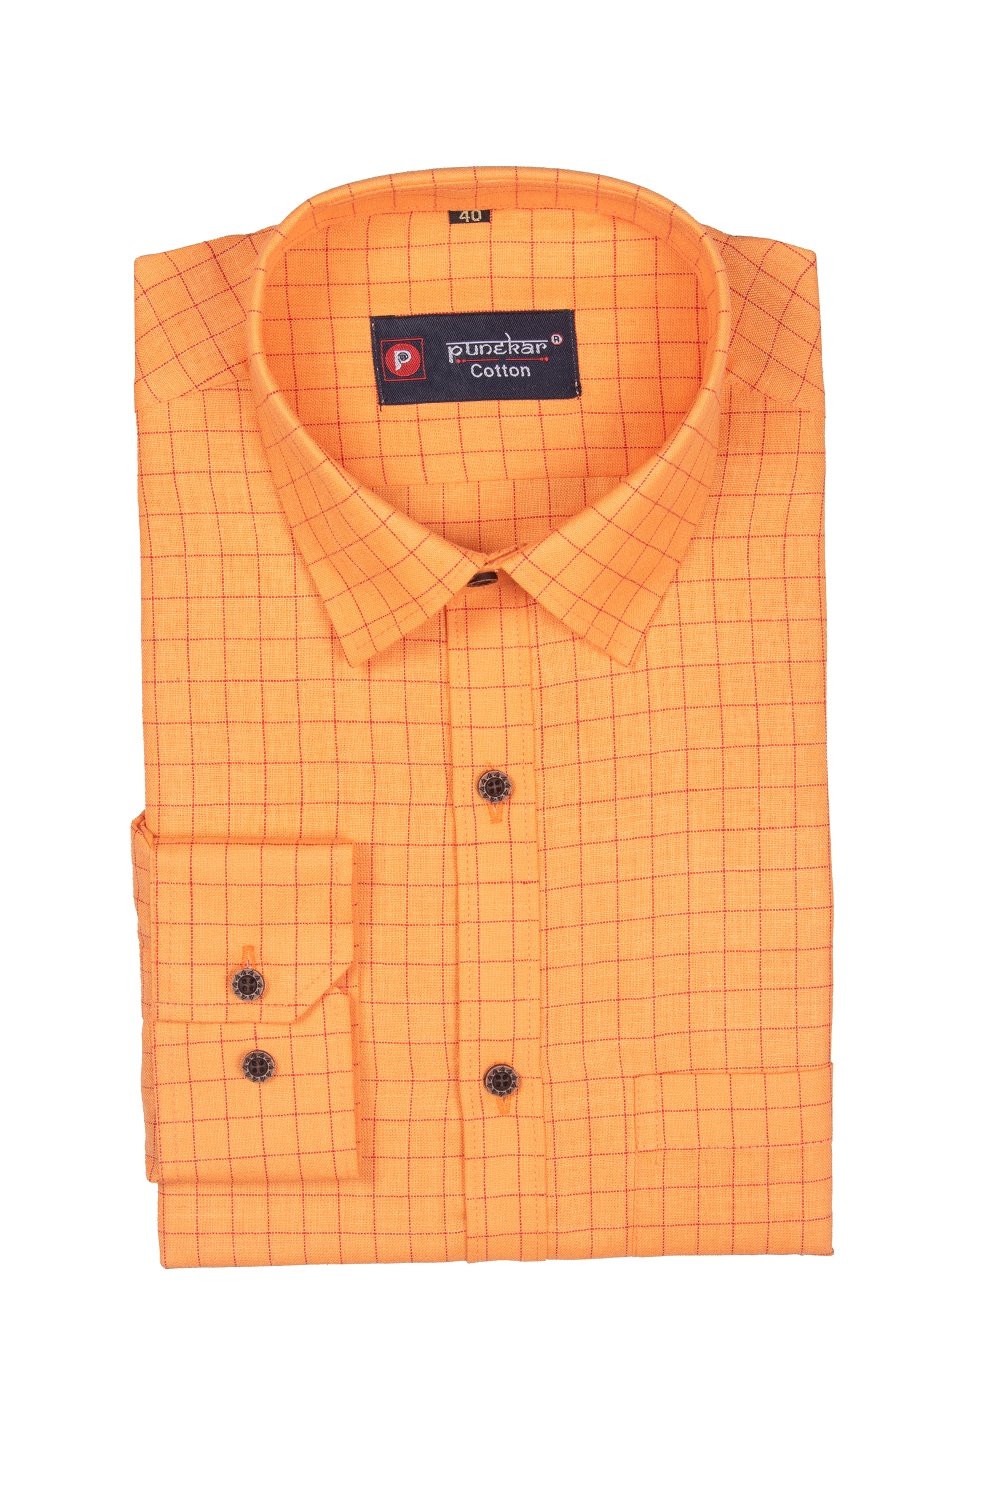 Punekar Cotton Tenn Orange Color Check Criss Cross Woven Cotton Shirt for Men&